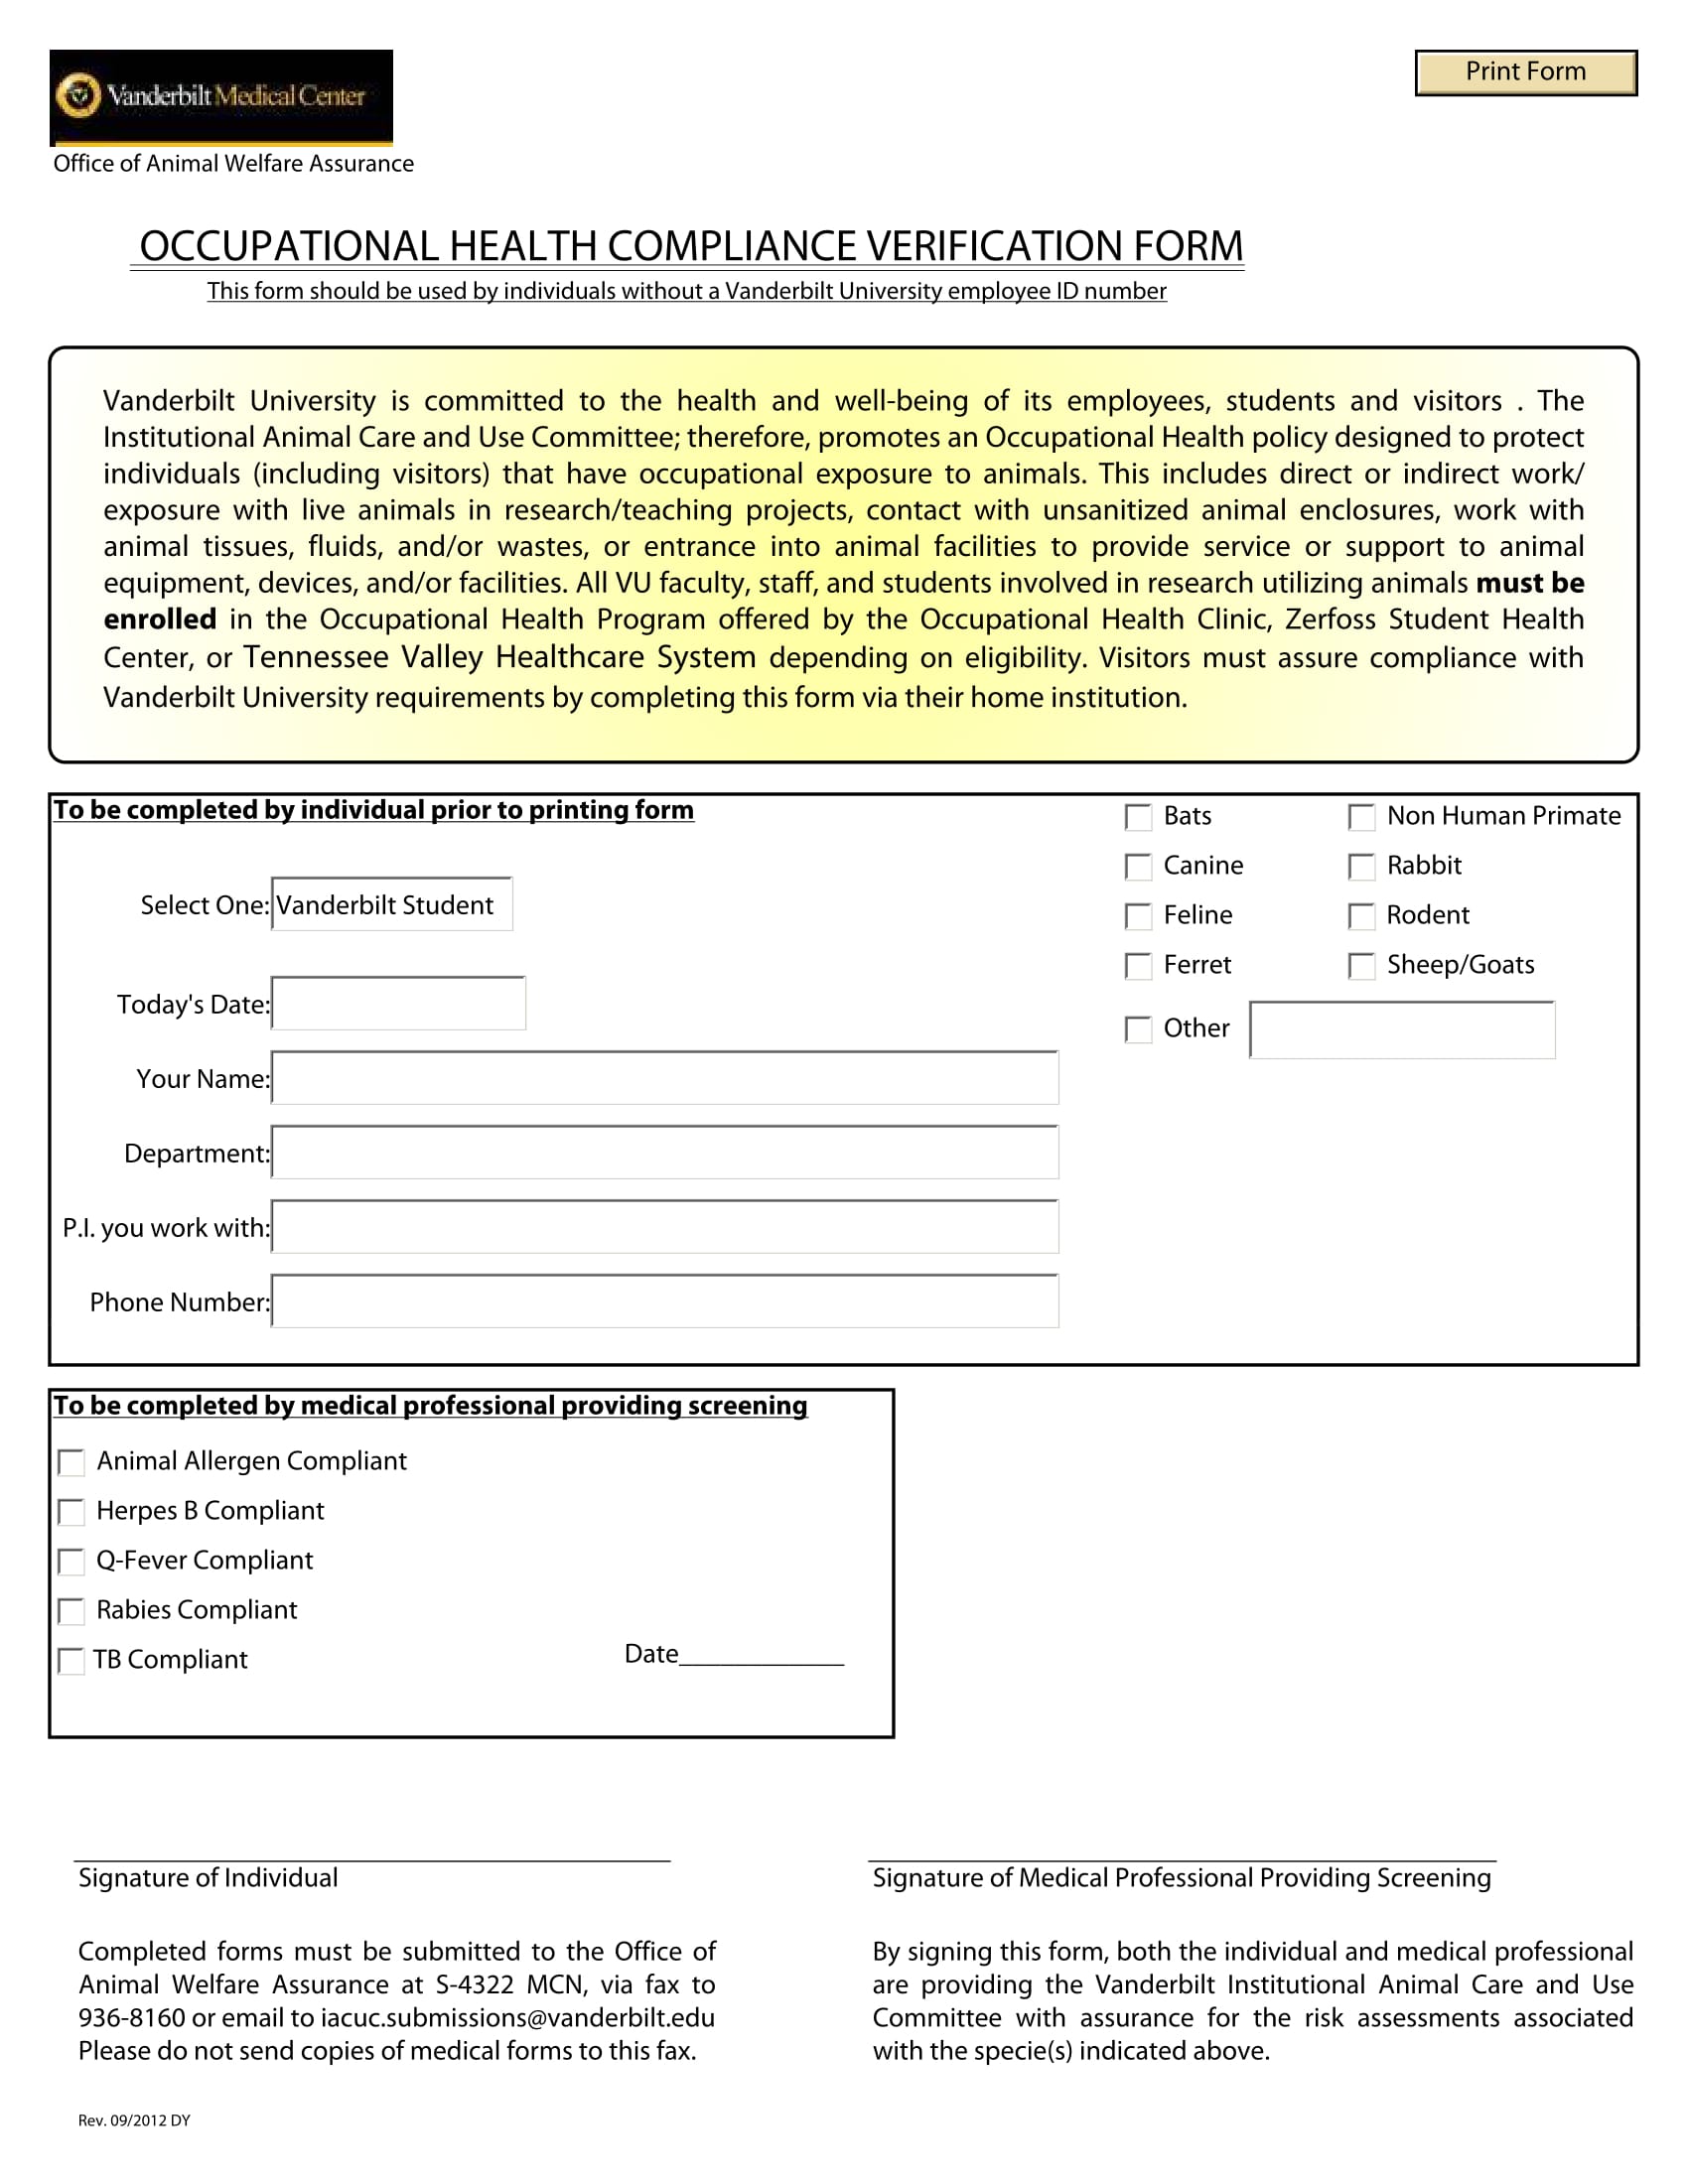 health compliance verification form 1